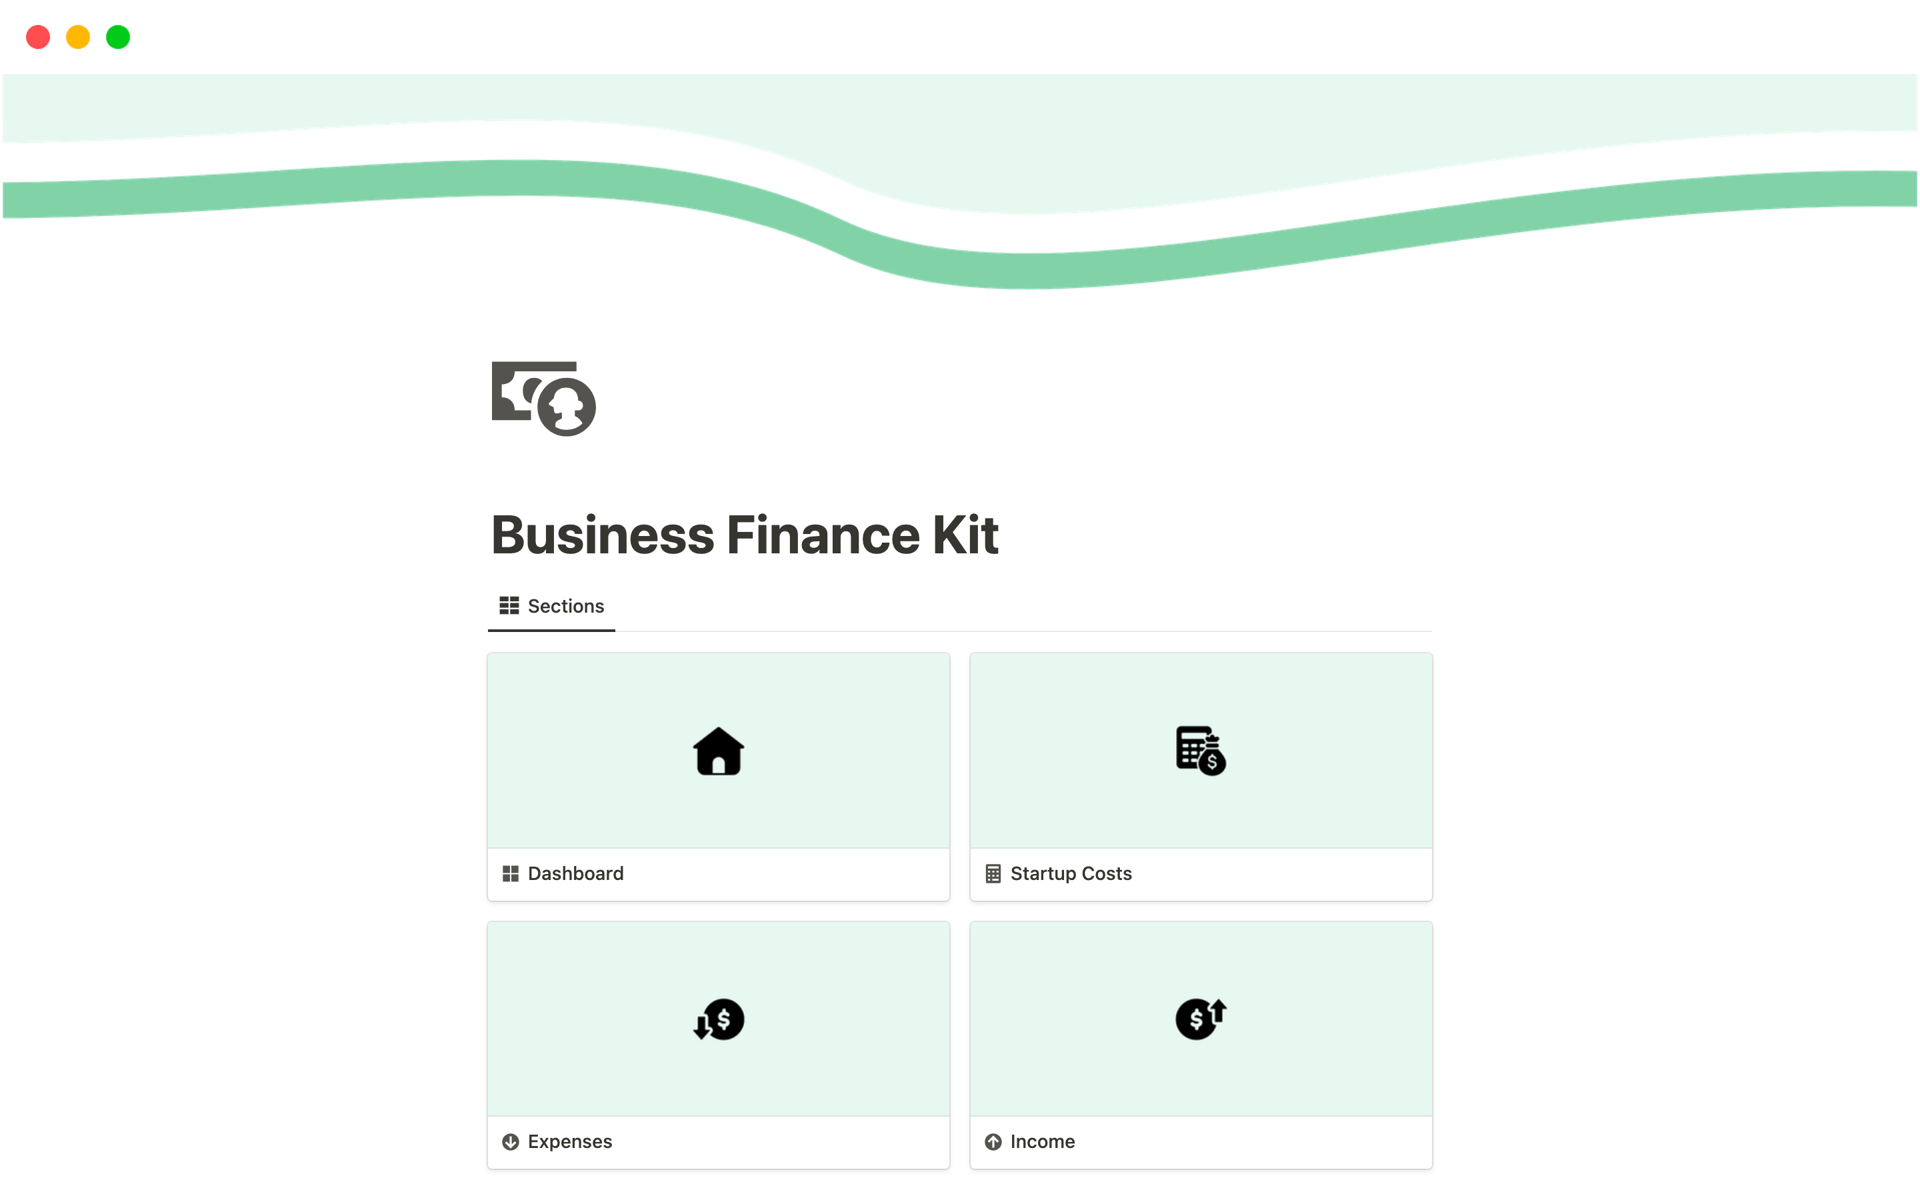 Vista previa de una plantilla para Business Finance Kit